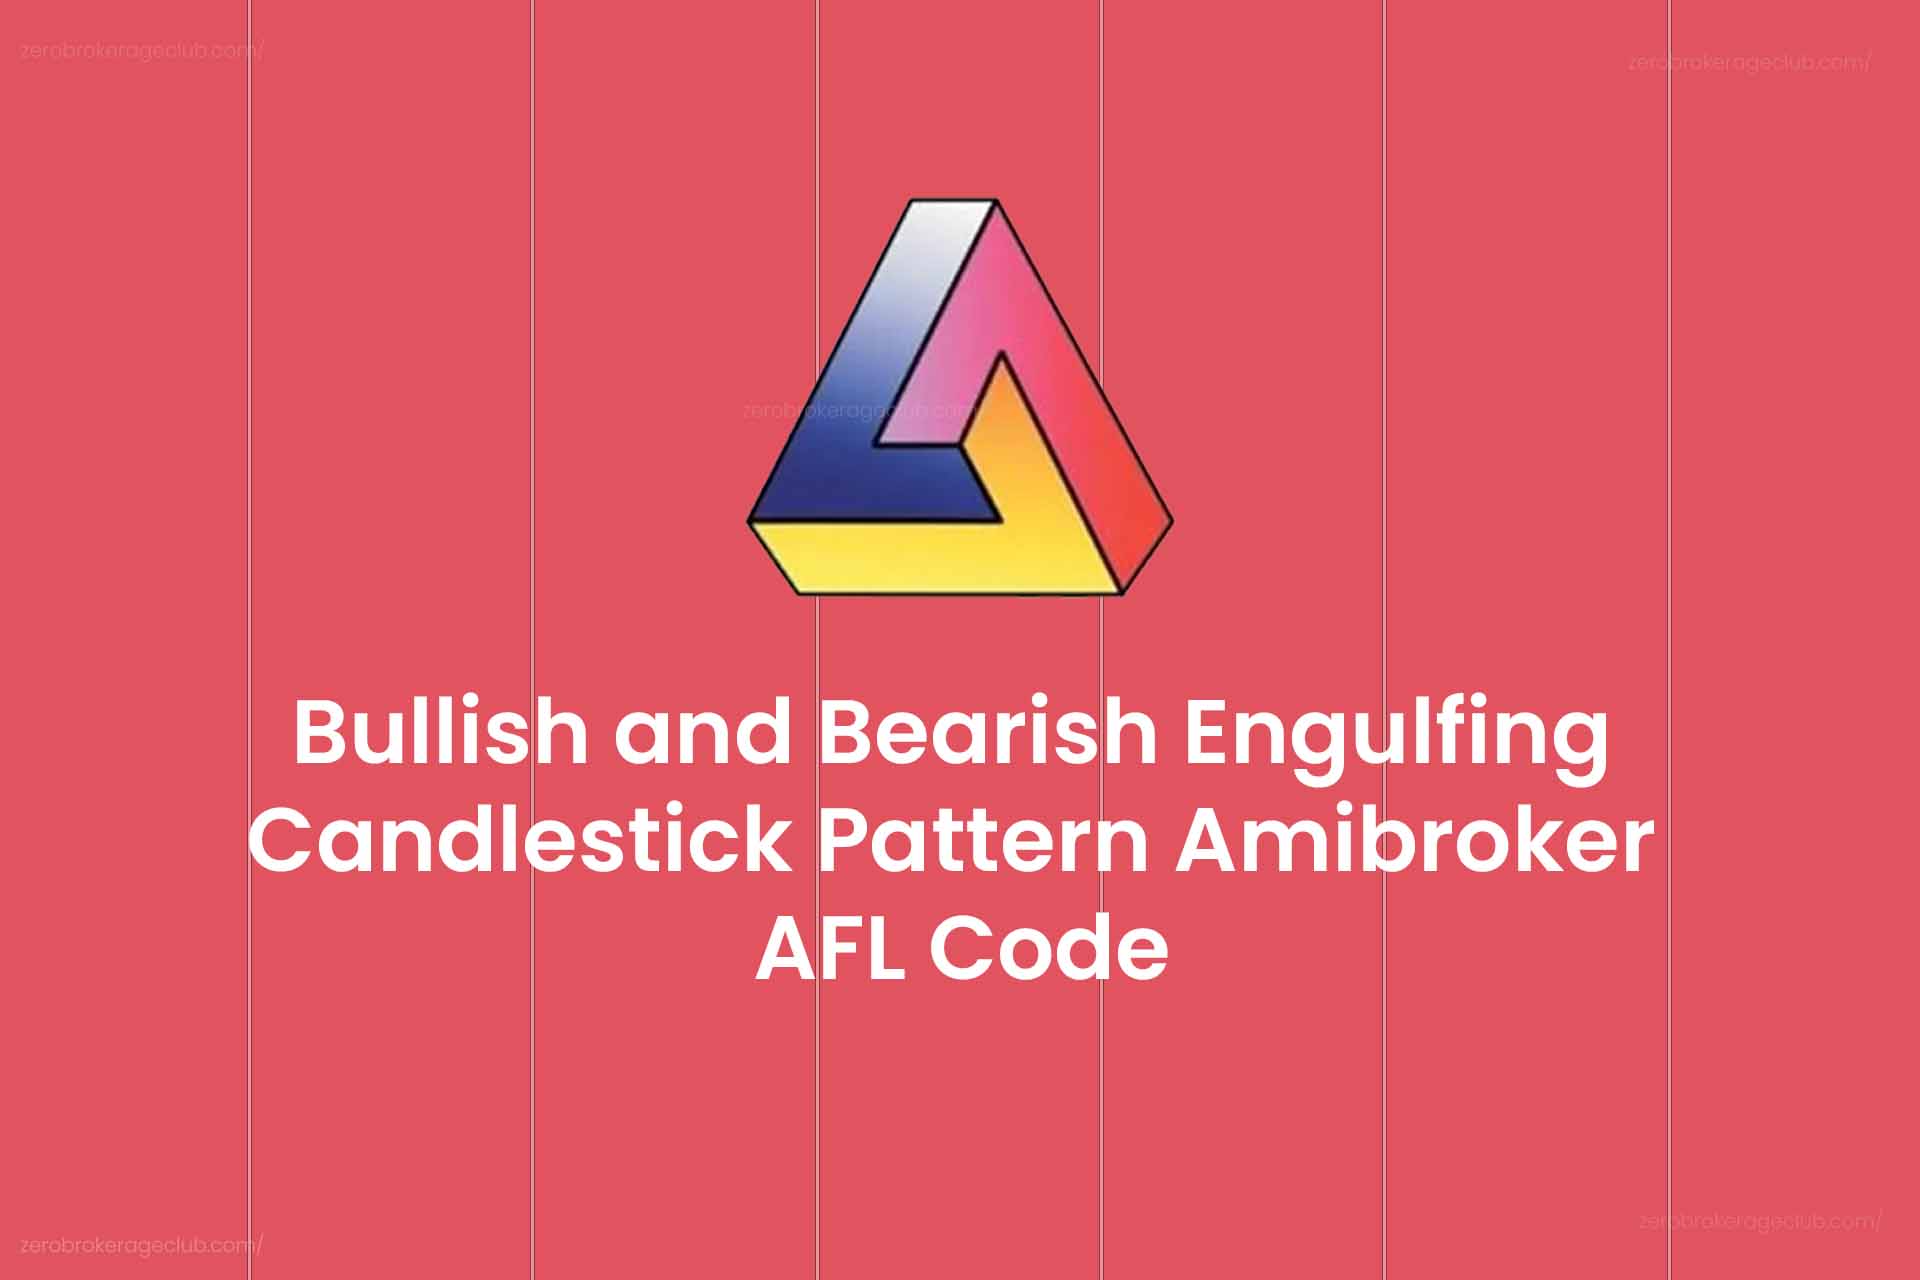 Bullish and Bearish Engulfing Candlestick Pattern Amibroker AFL Code